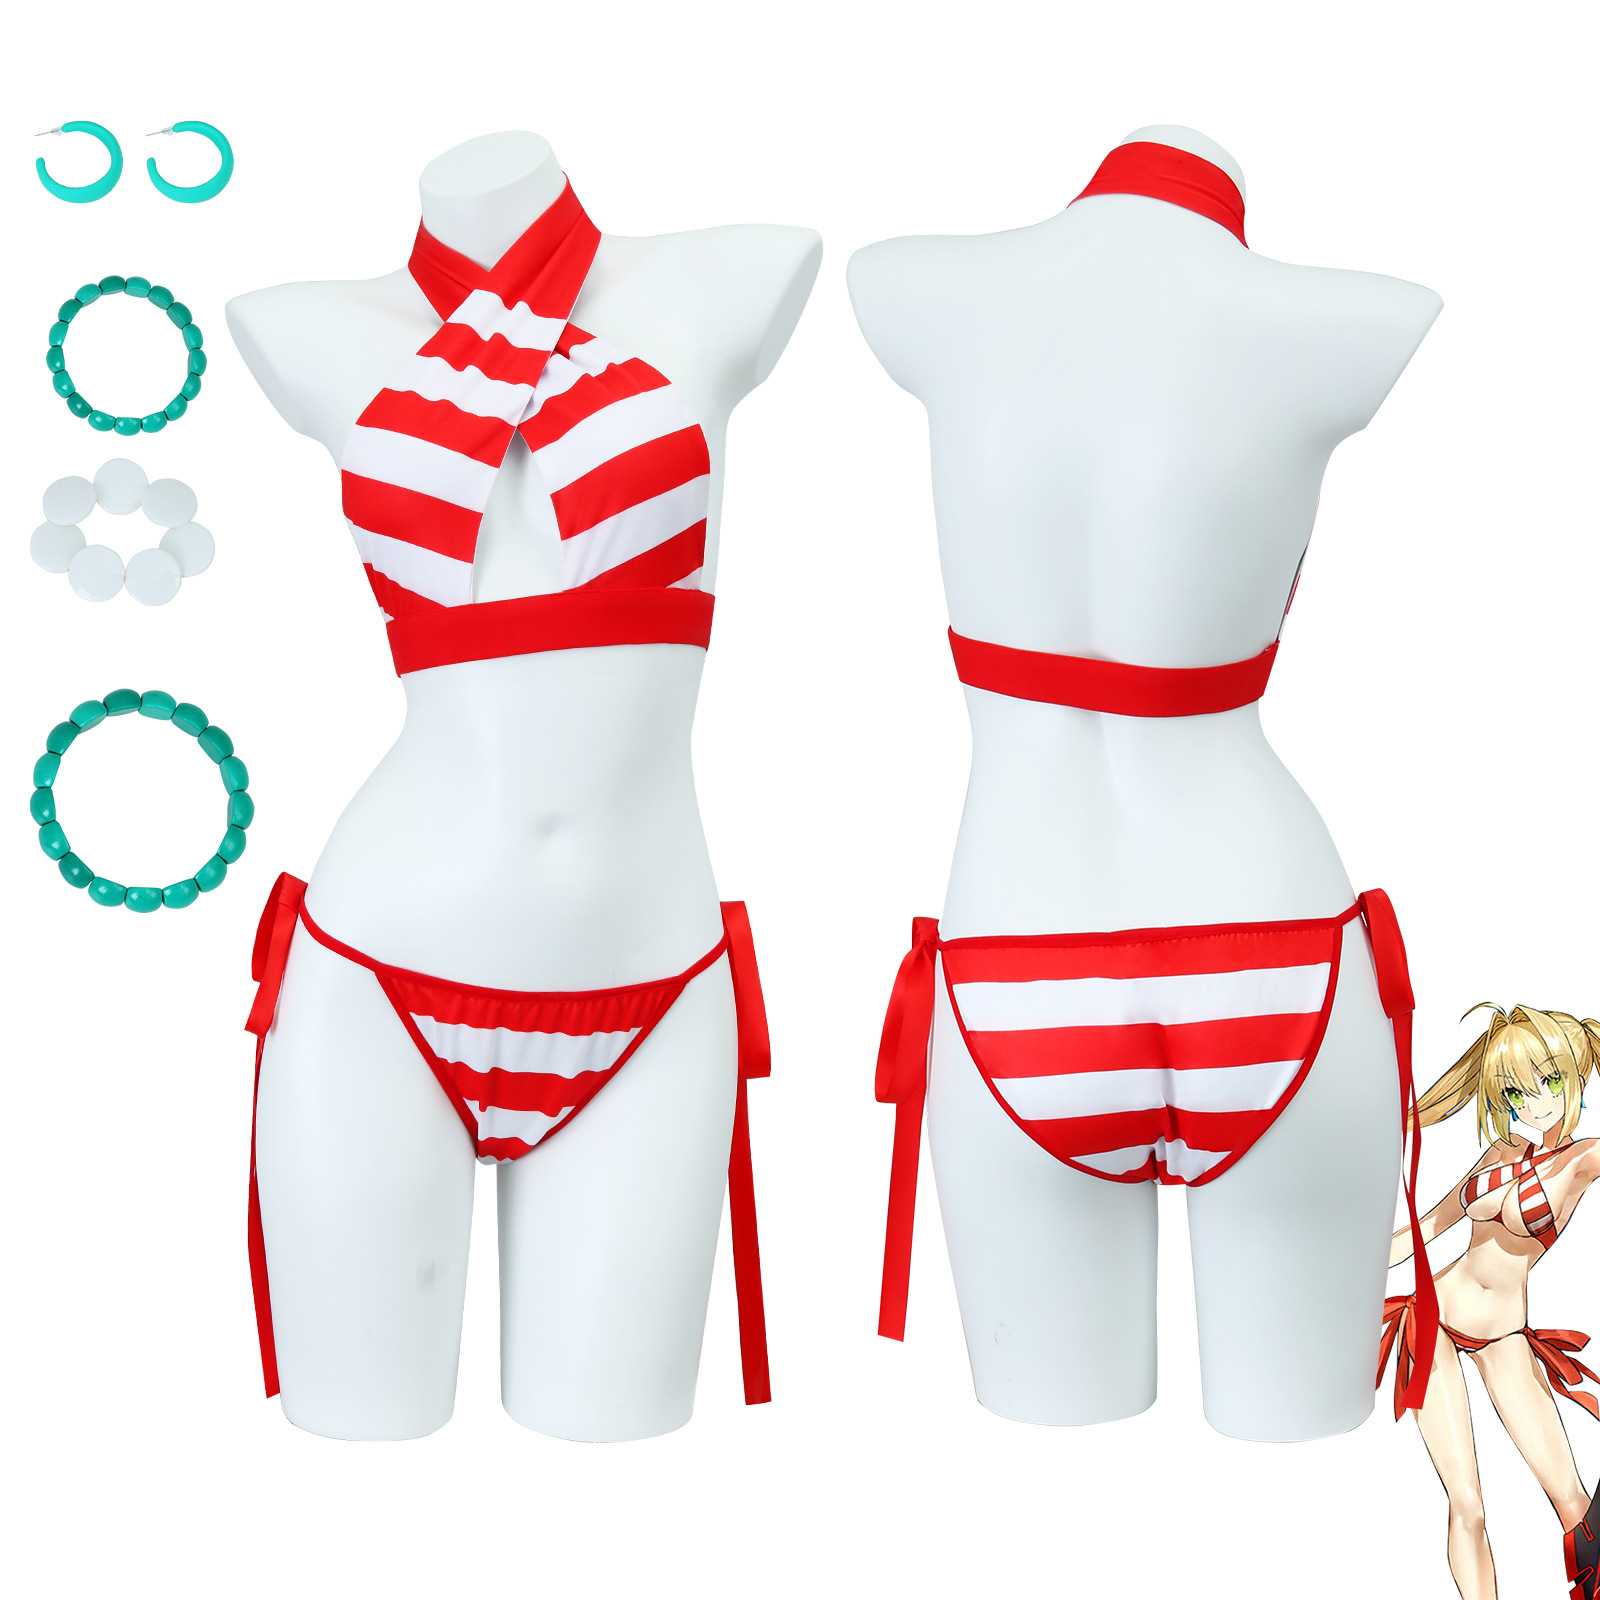 FGO Fate/Grand Order 暴君尼禄泳装泳衣cosplay服装角色扮演套装